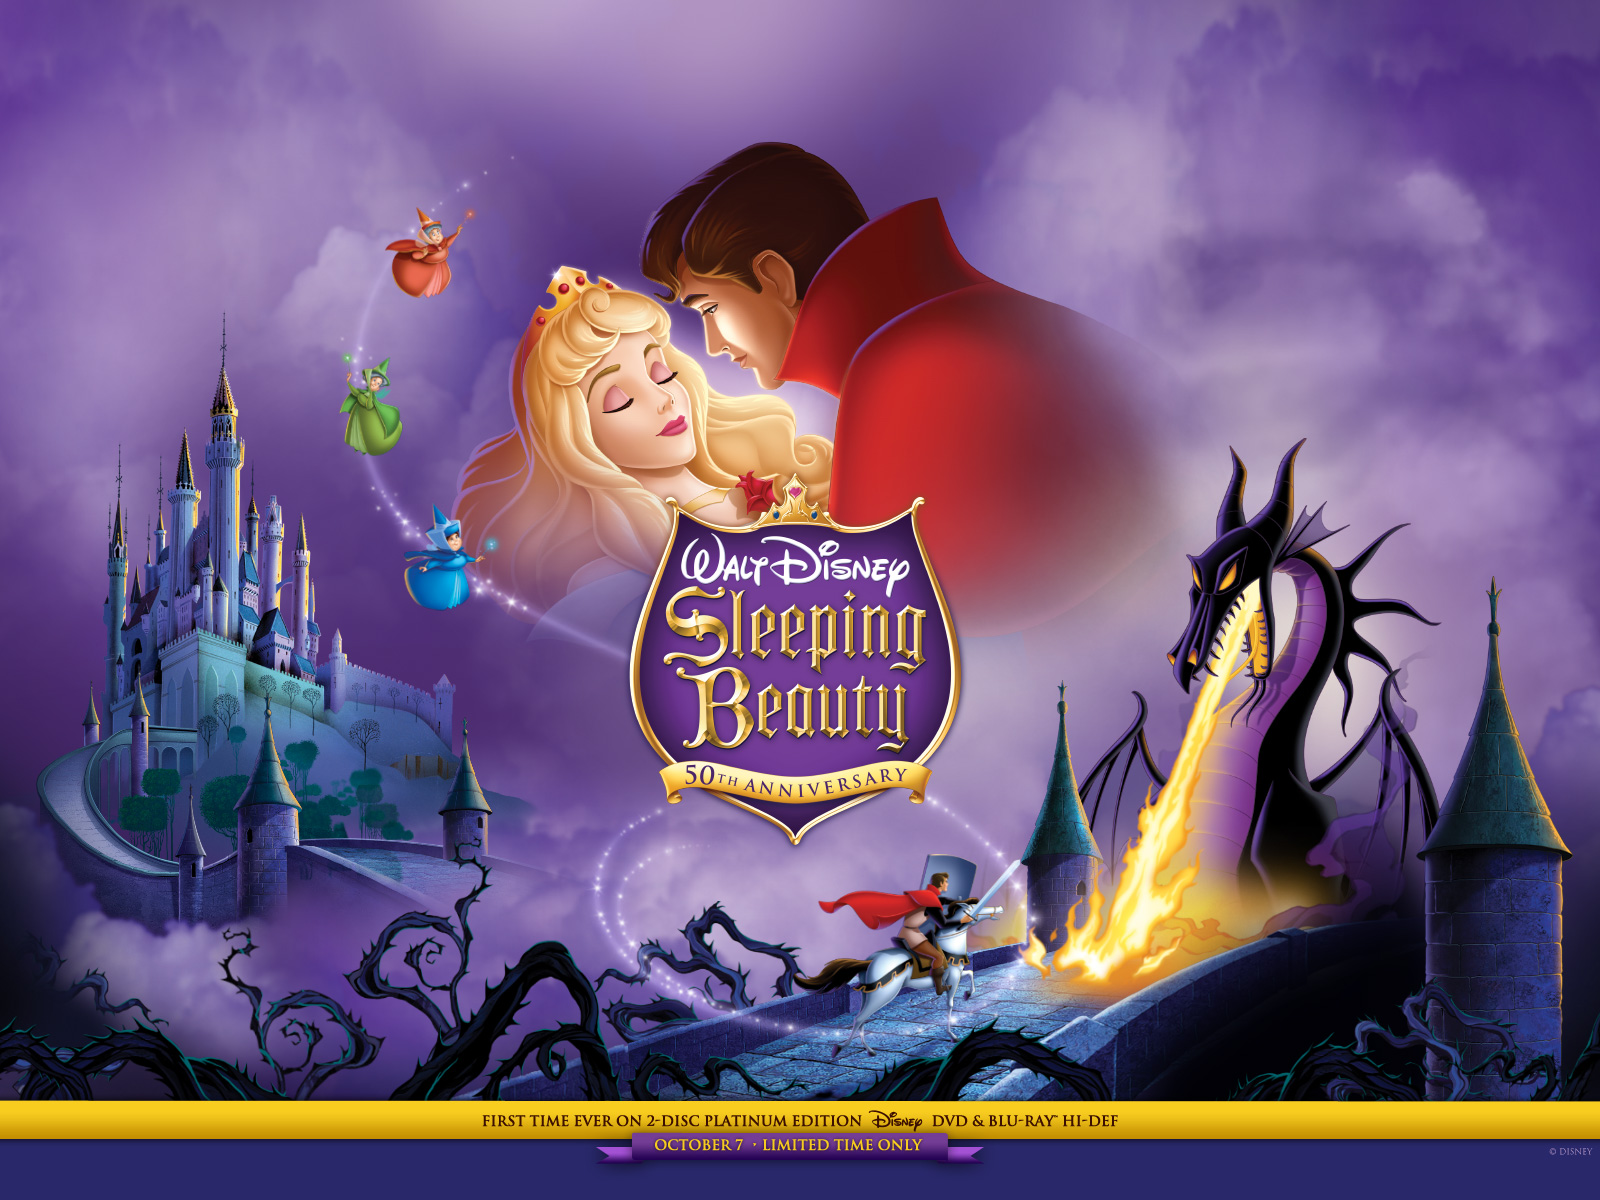 [49+] Sleeping Beauty Desktop Wallpaper on WallpaperSafari